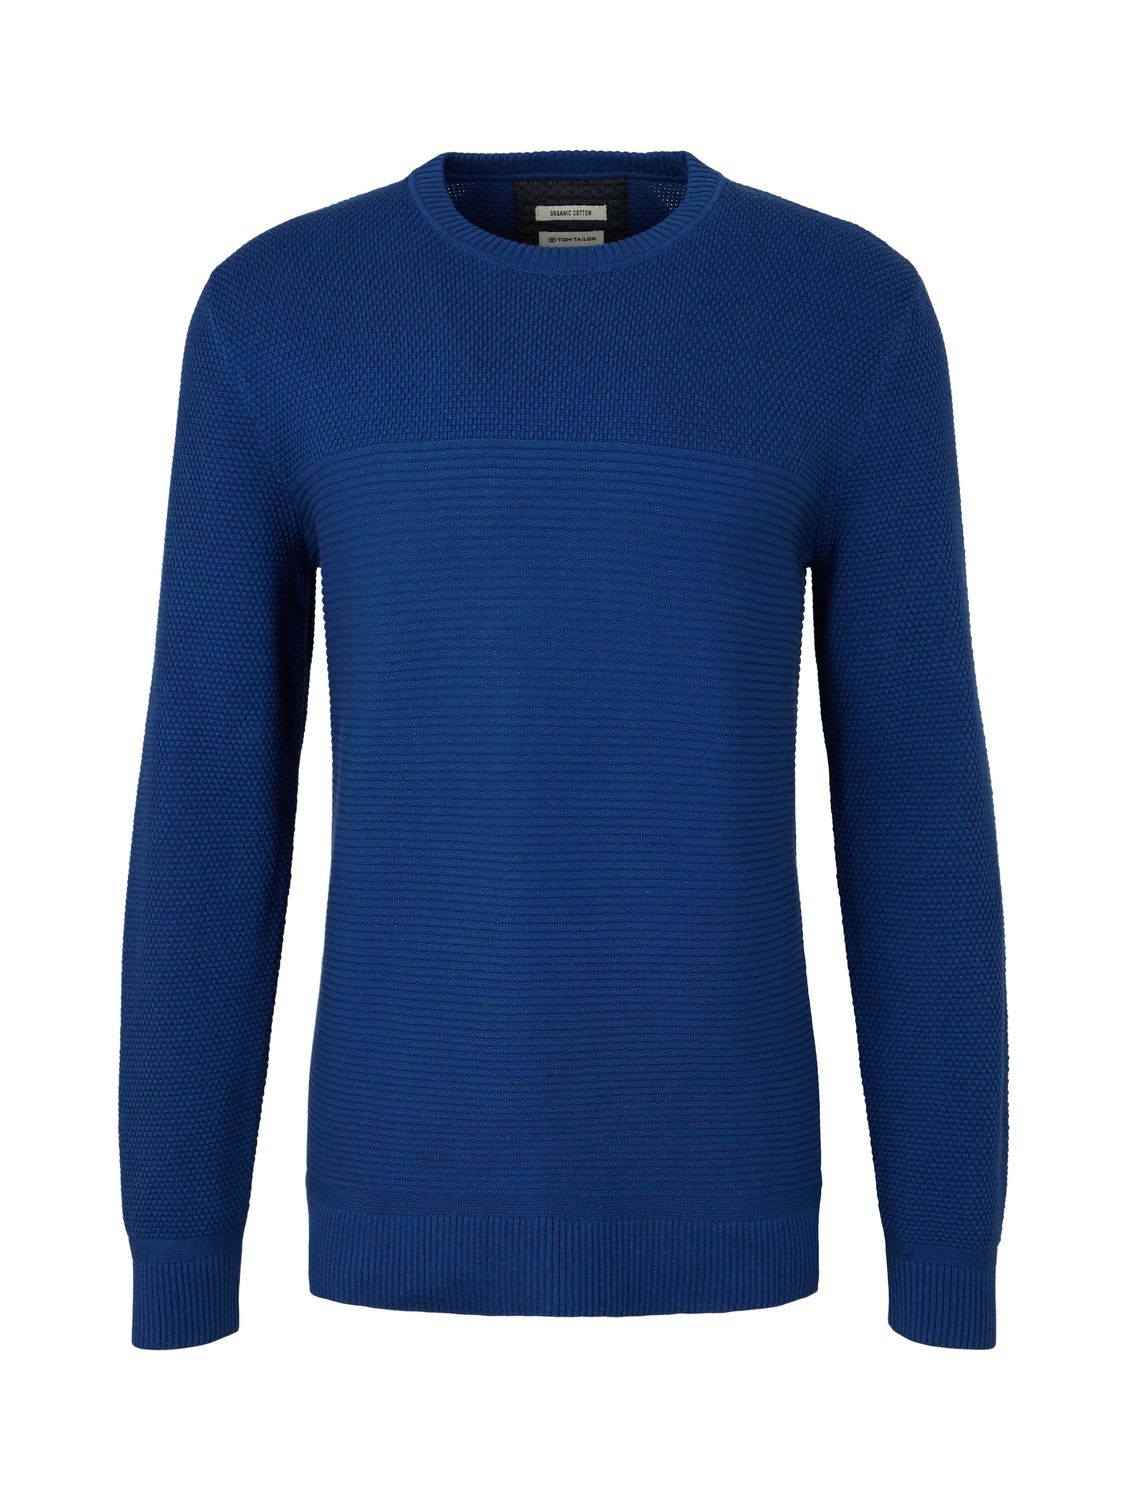 Пуловер Tom Tailor BASIC STRUCTURED, синий пуловер tom tailor denim structured doublelayer серый